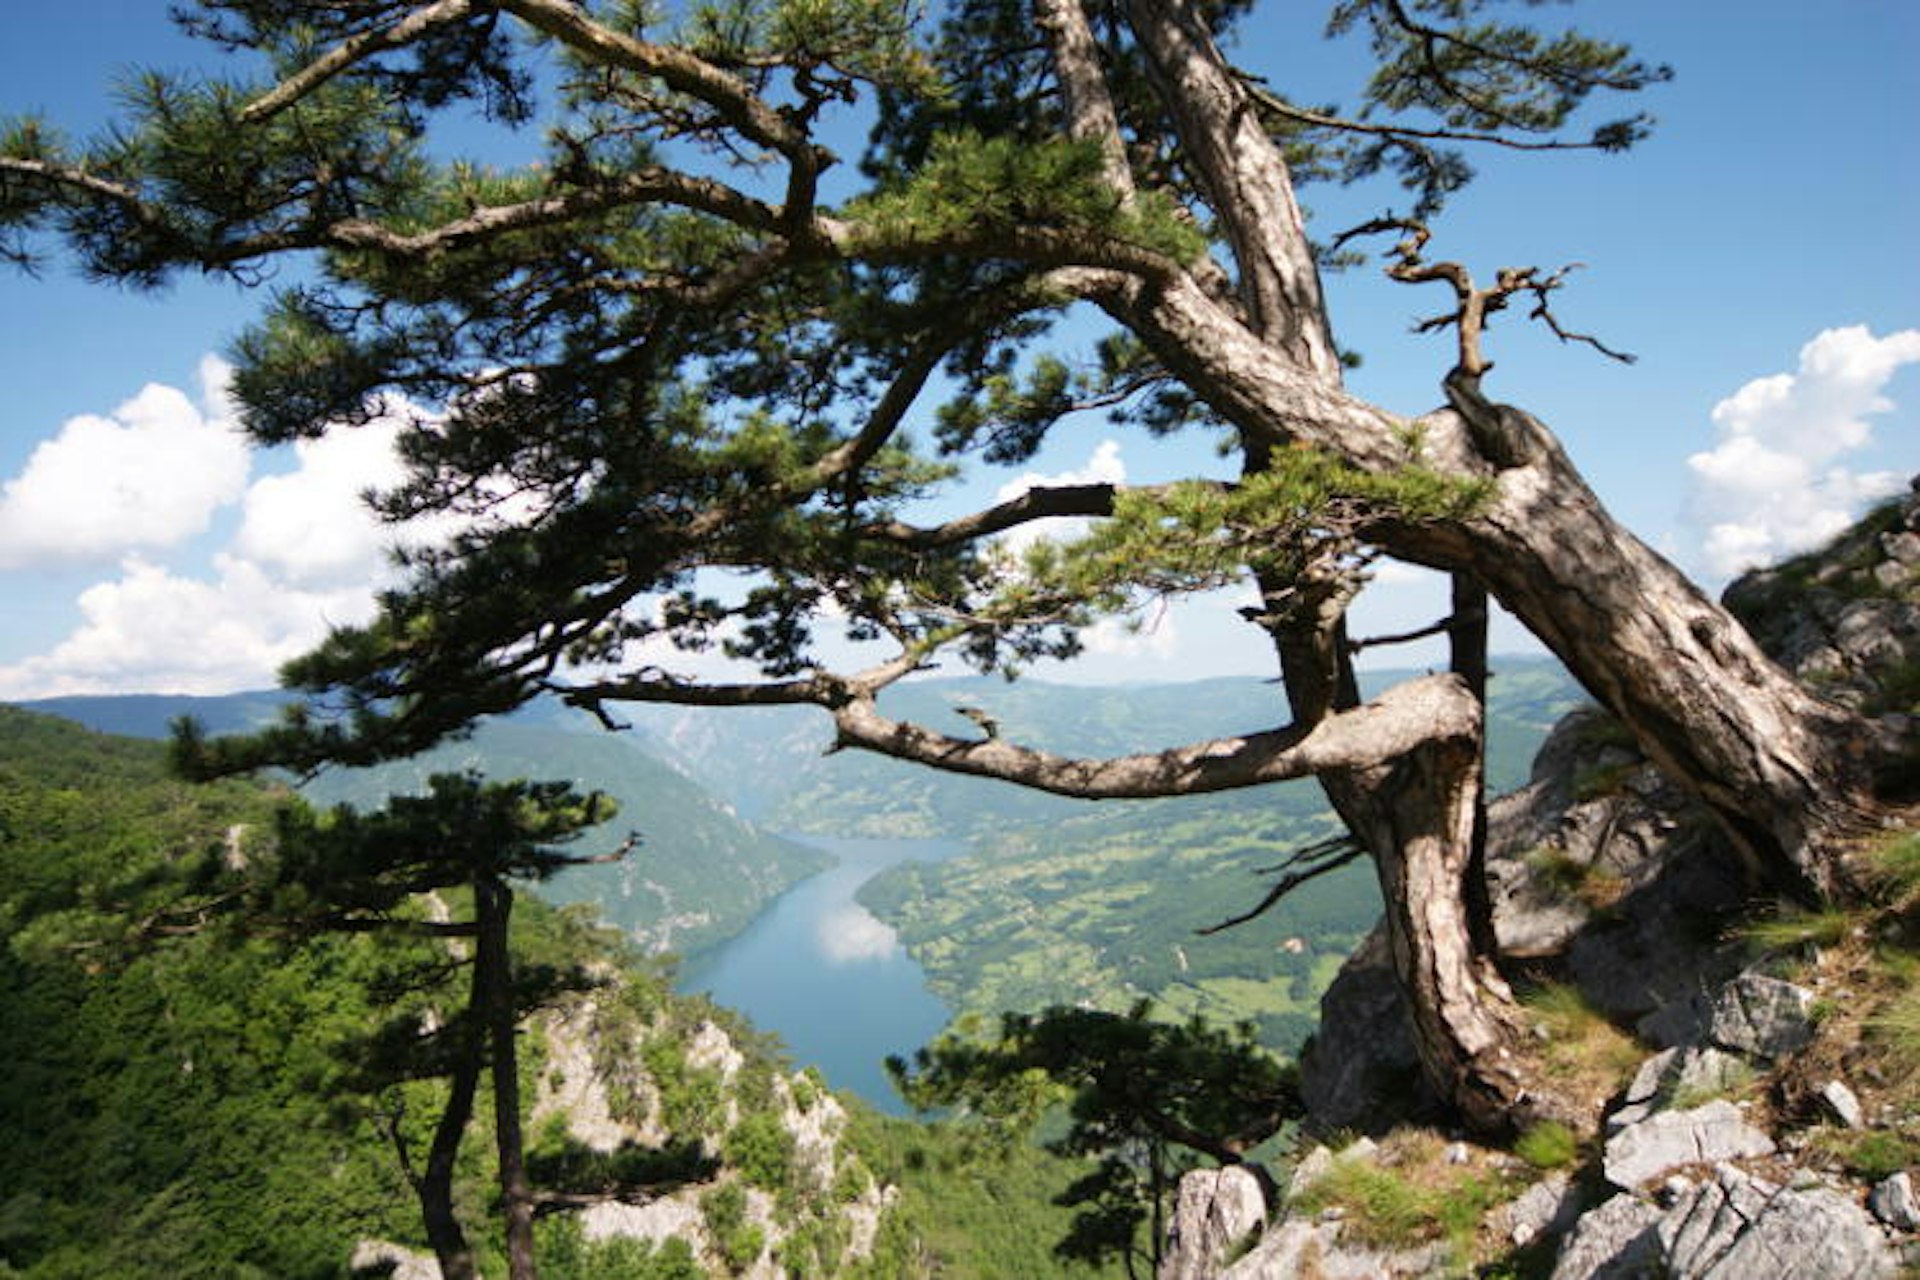 Drina river, Tara National Park. Image by Branko Jovanović / Courtesy of National Tourism Organisation of Serbia